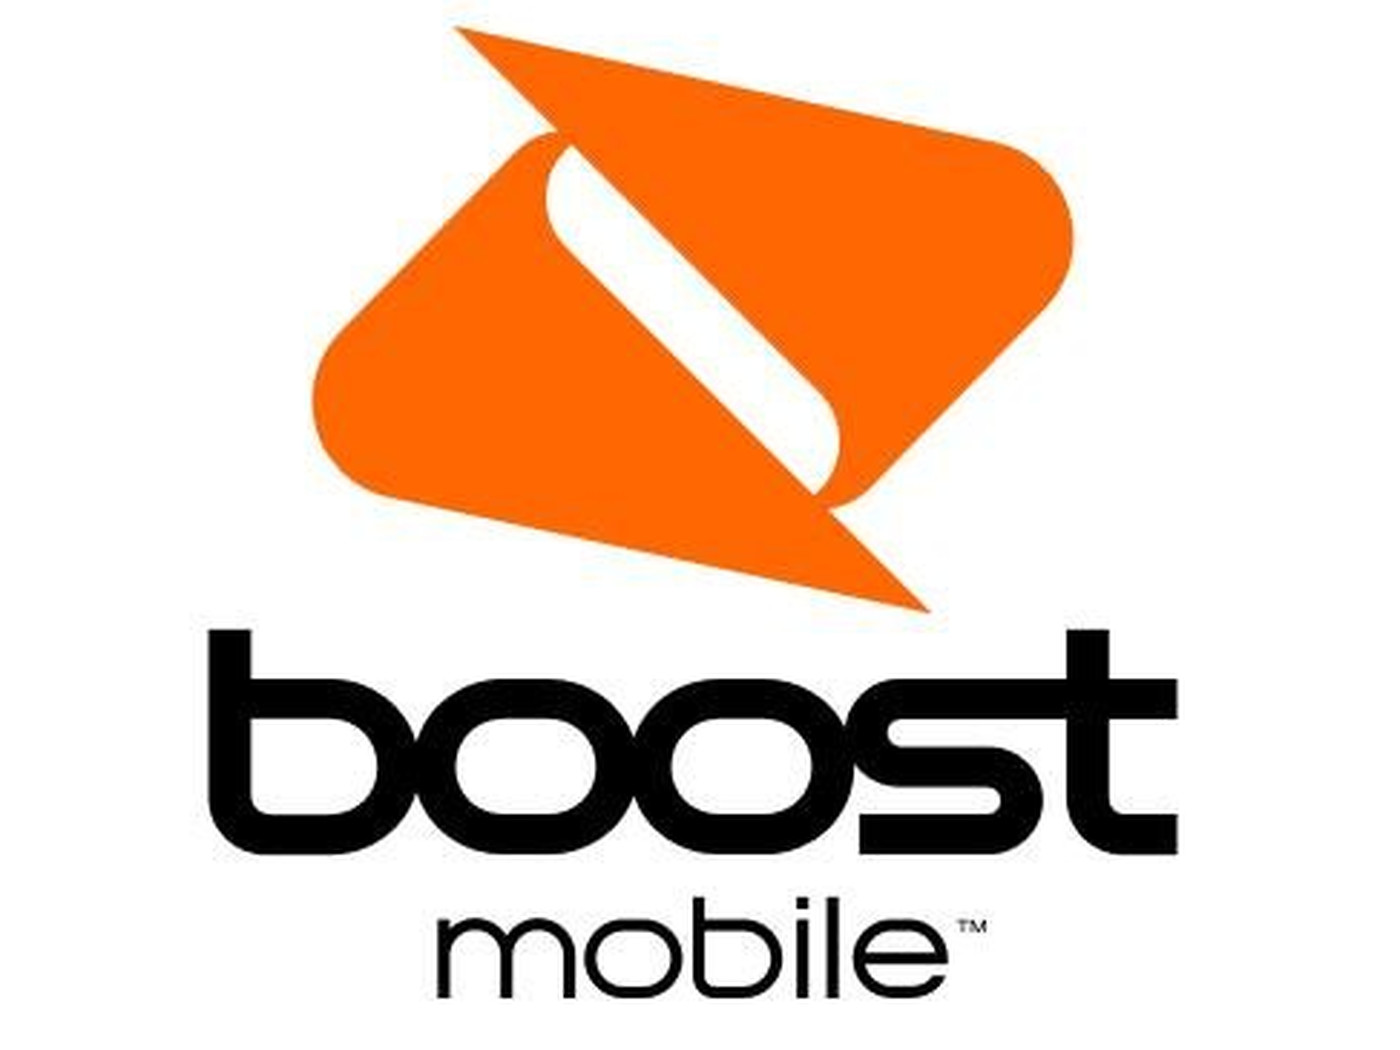 Boost Mobile Wallpapers - PixelsTalk.Net